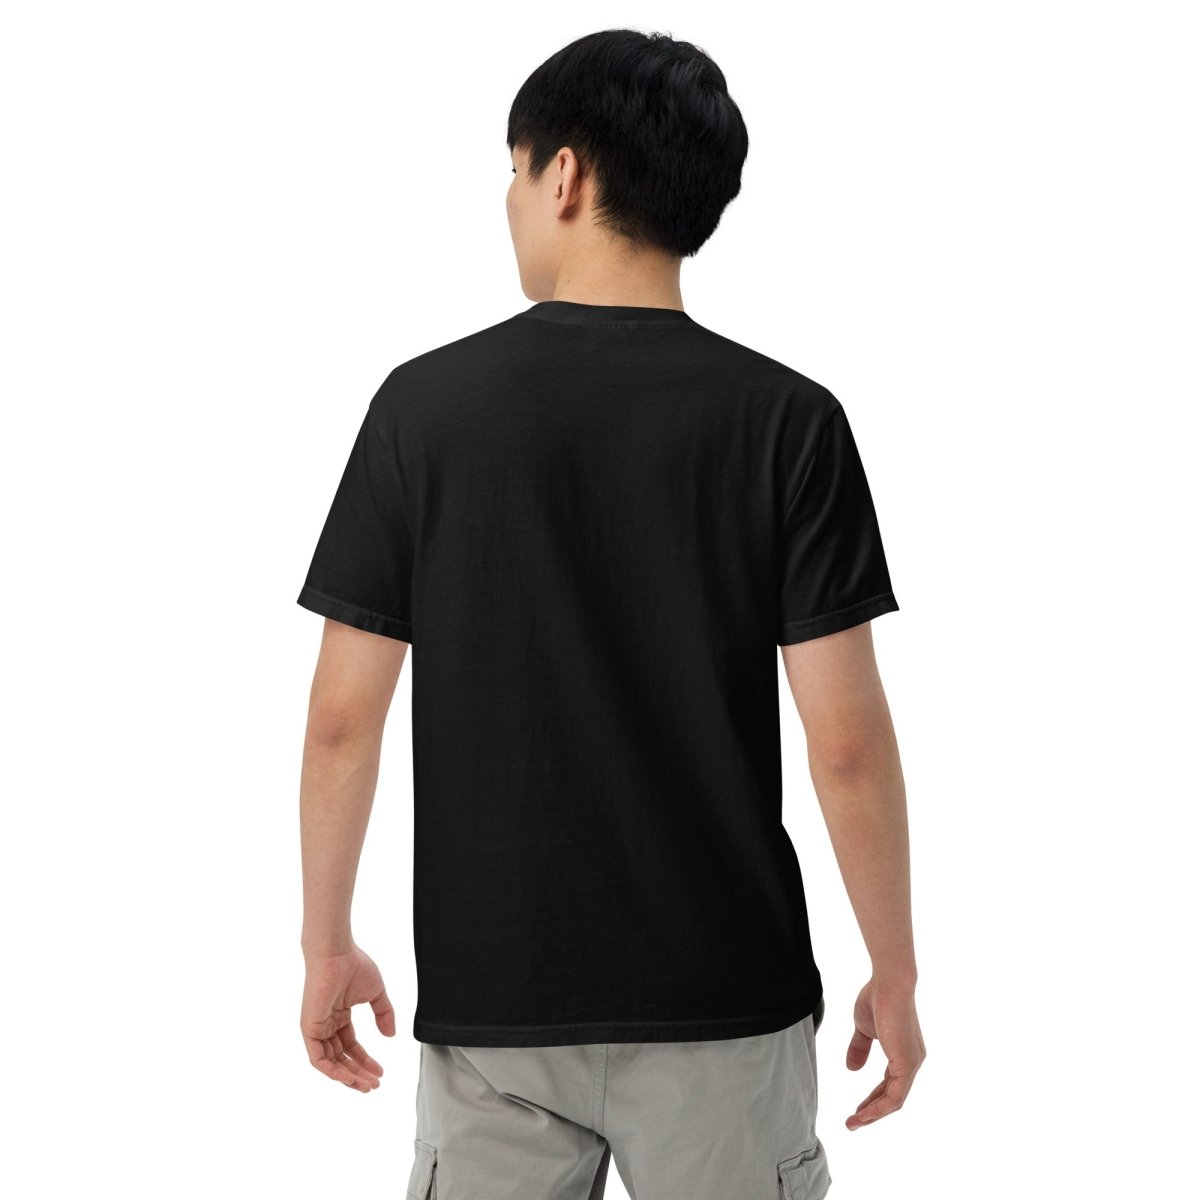 Unisex garment-dyed heavyweight t-shirt - Wifler Industries--Wifler Industries-3408529_15114--Black-S--Unisex garment-dyed